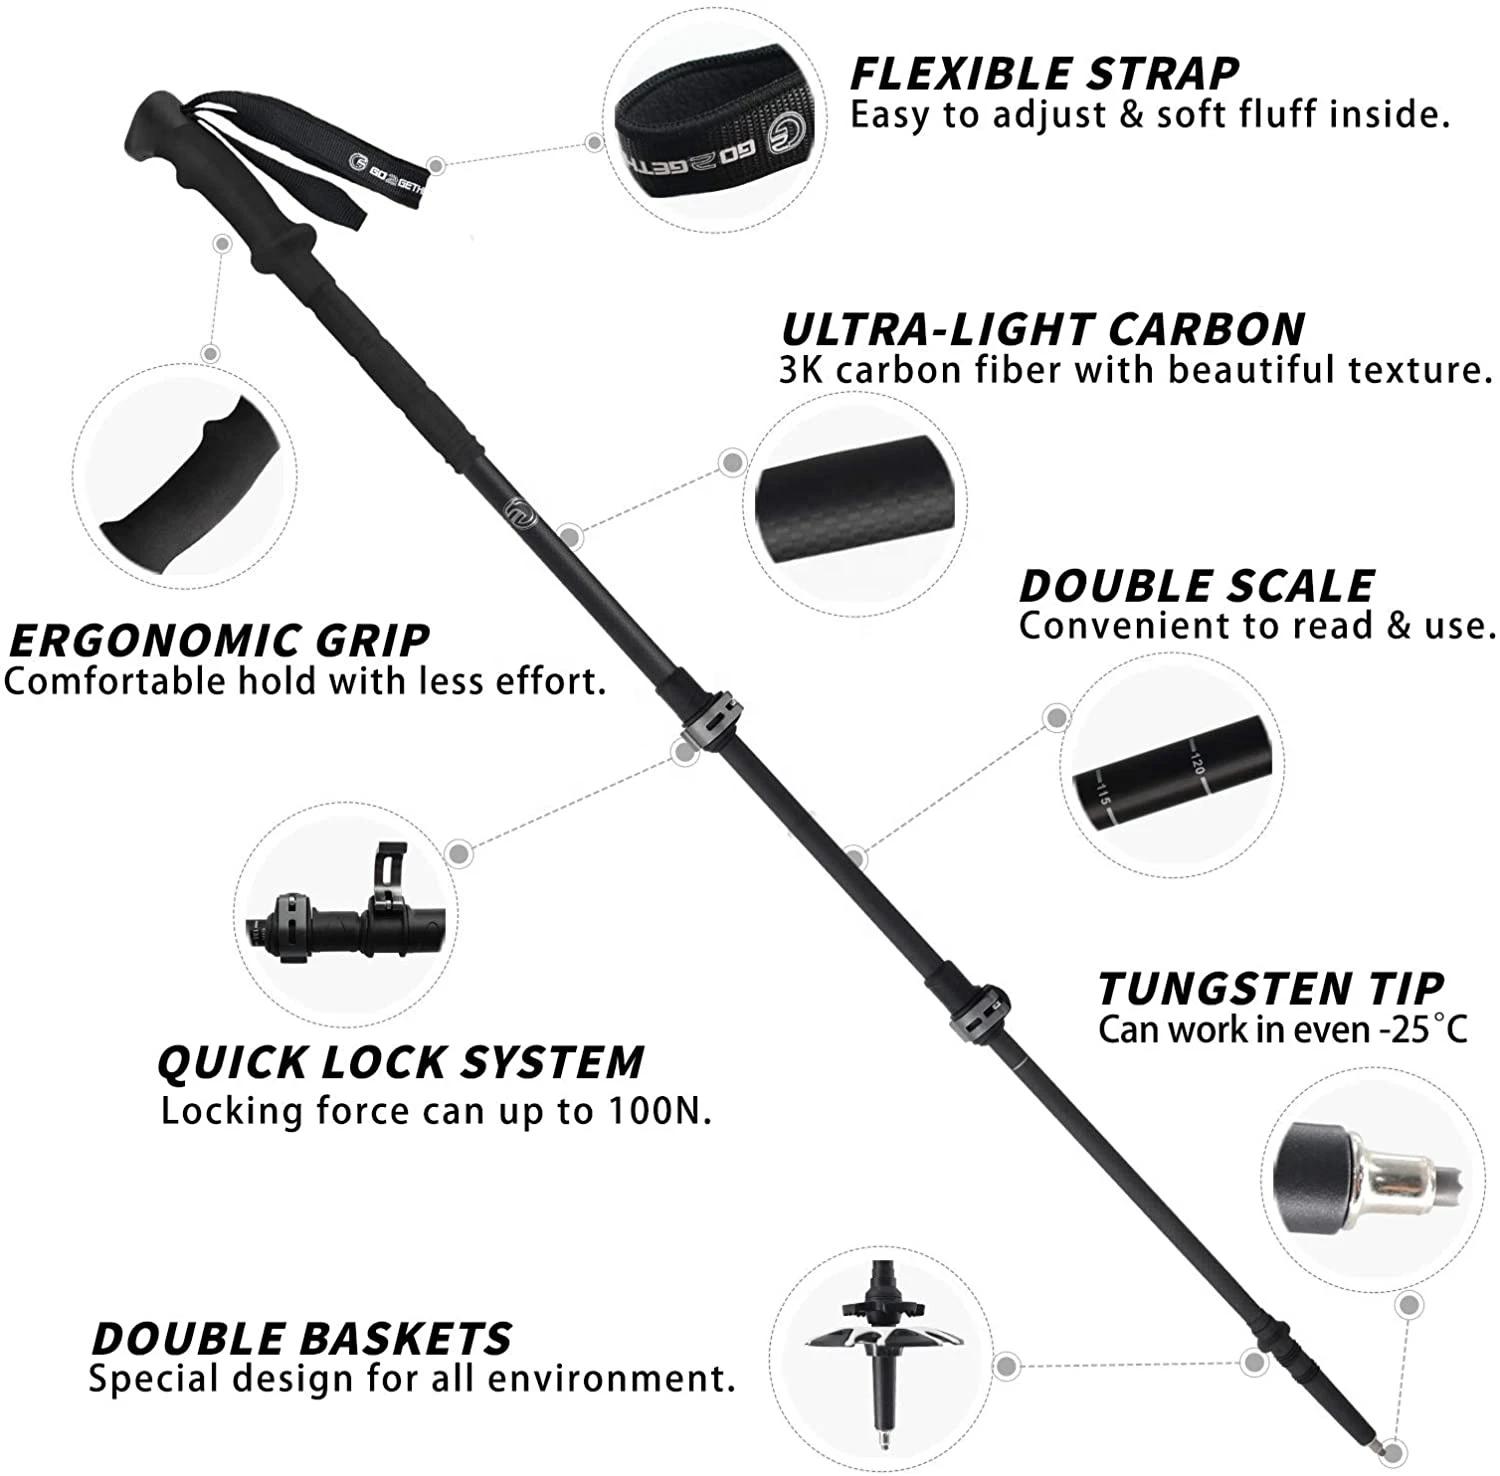 Ultralight (3K) Carbon Fiber Telescopic Nordic Walking Hiking Trekking Poles / Sticks with Extended EVA Handle